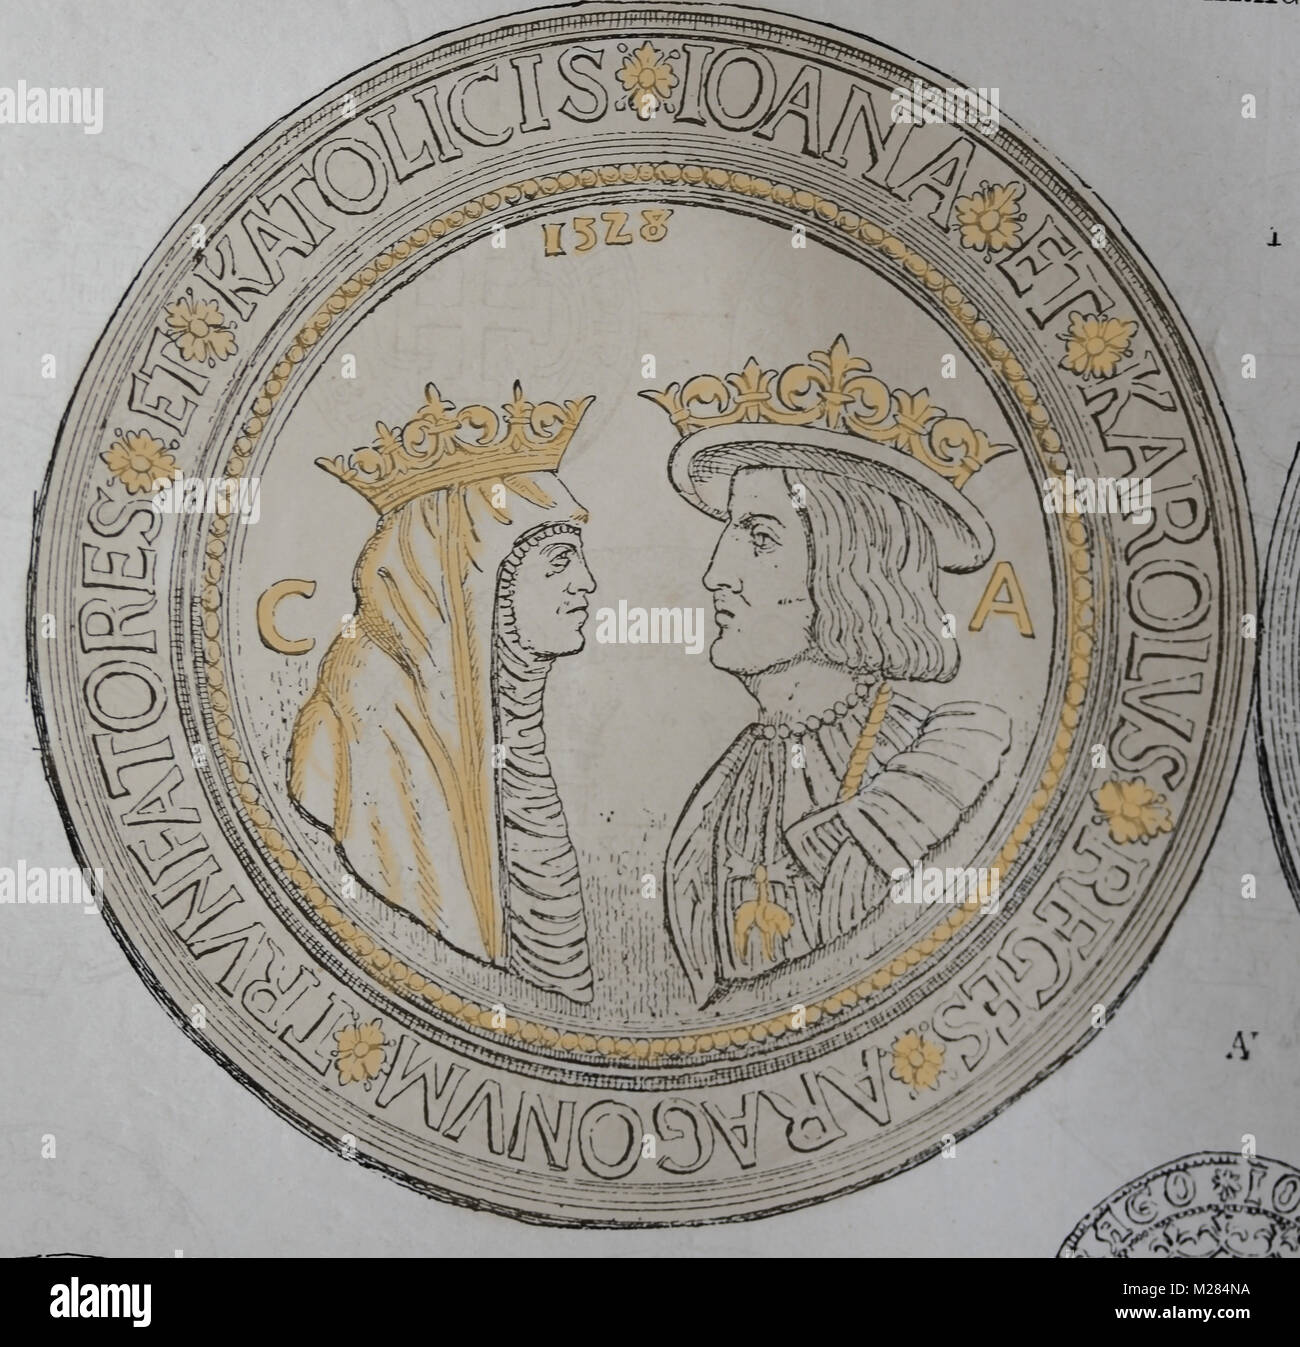 Ferdinand II of Aragon and king Isabella II of Castile. Catholic Monarchs. 15th century. Stock Photo